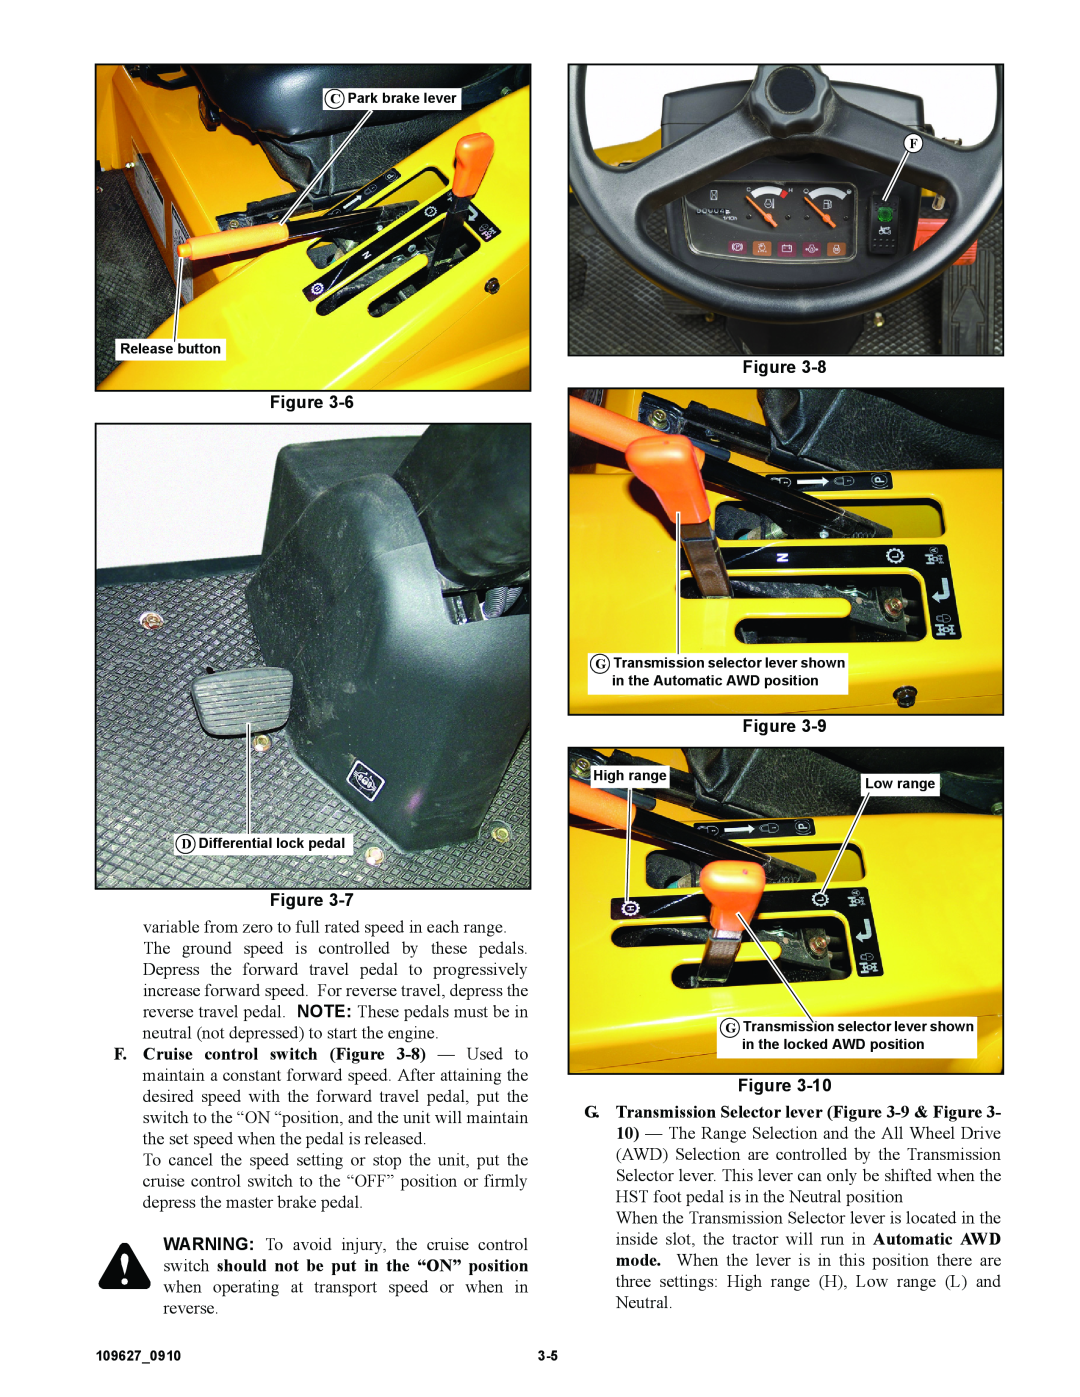 Hustler Turf 3700, 3500 owner manual C Park brake lever Release button, D Differential lock pedal, High range 